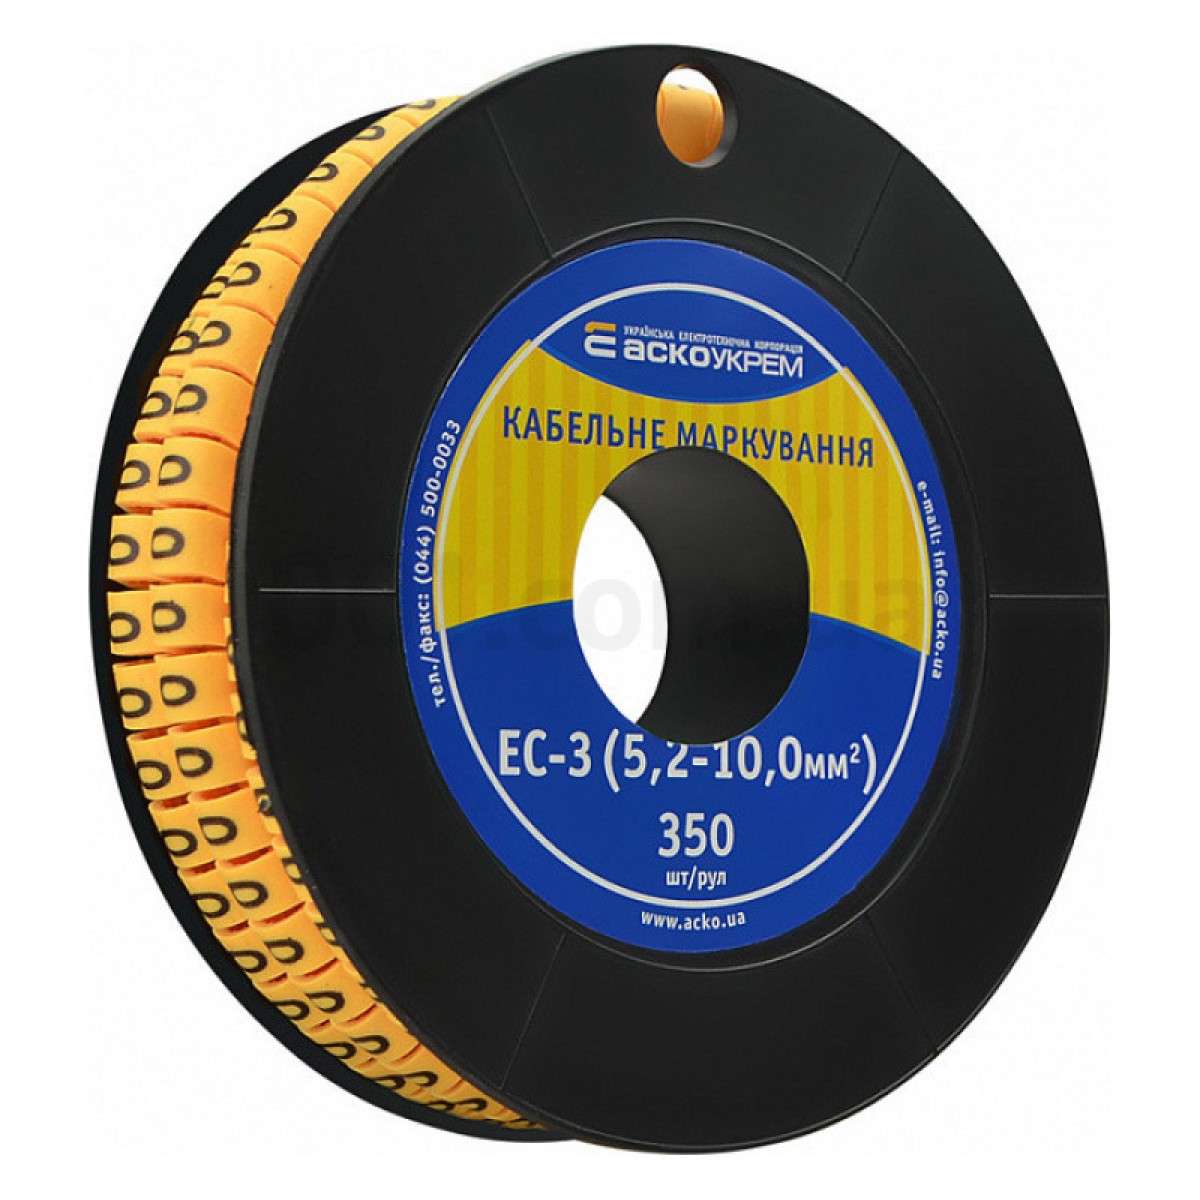 Маркировка EC-3 для кабеля 5,2-10,0 мм² символ «0» (рулон 250 шт.), АСКО-УКРЕМ 98_98.jpg - фото 1